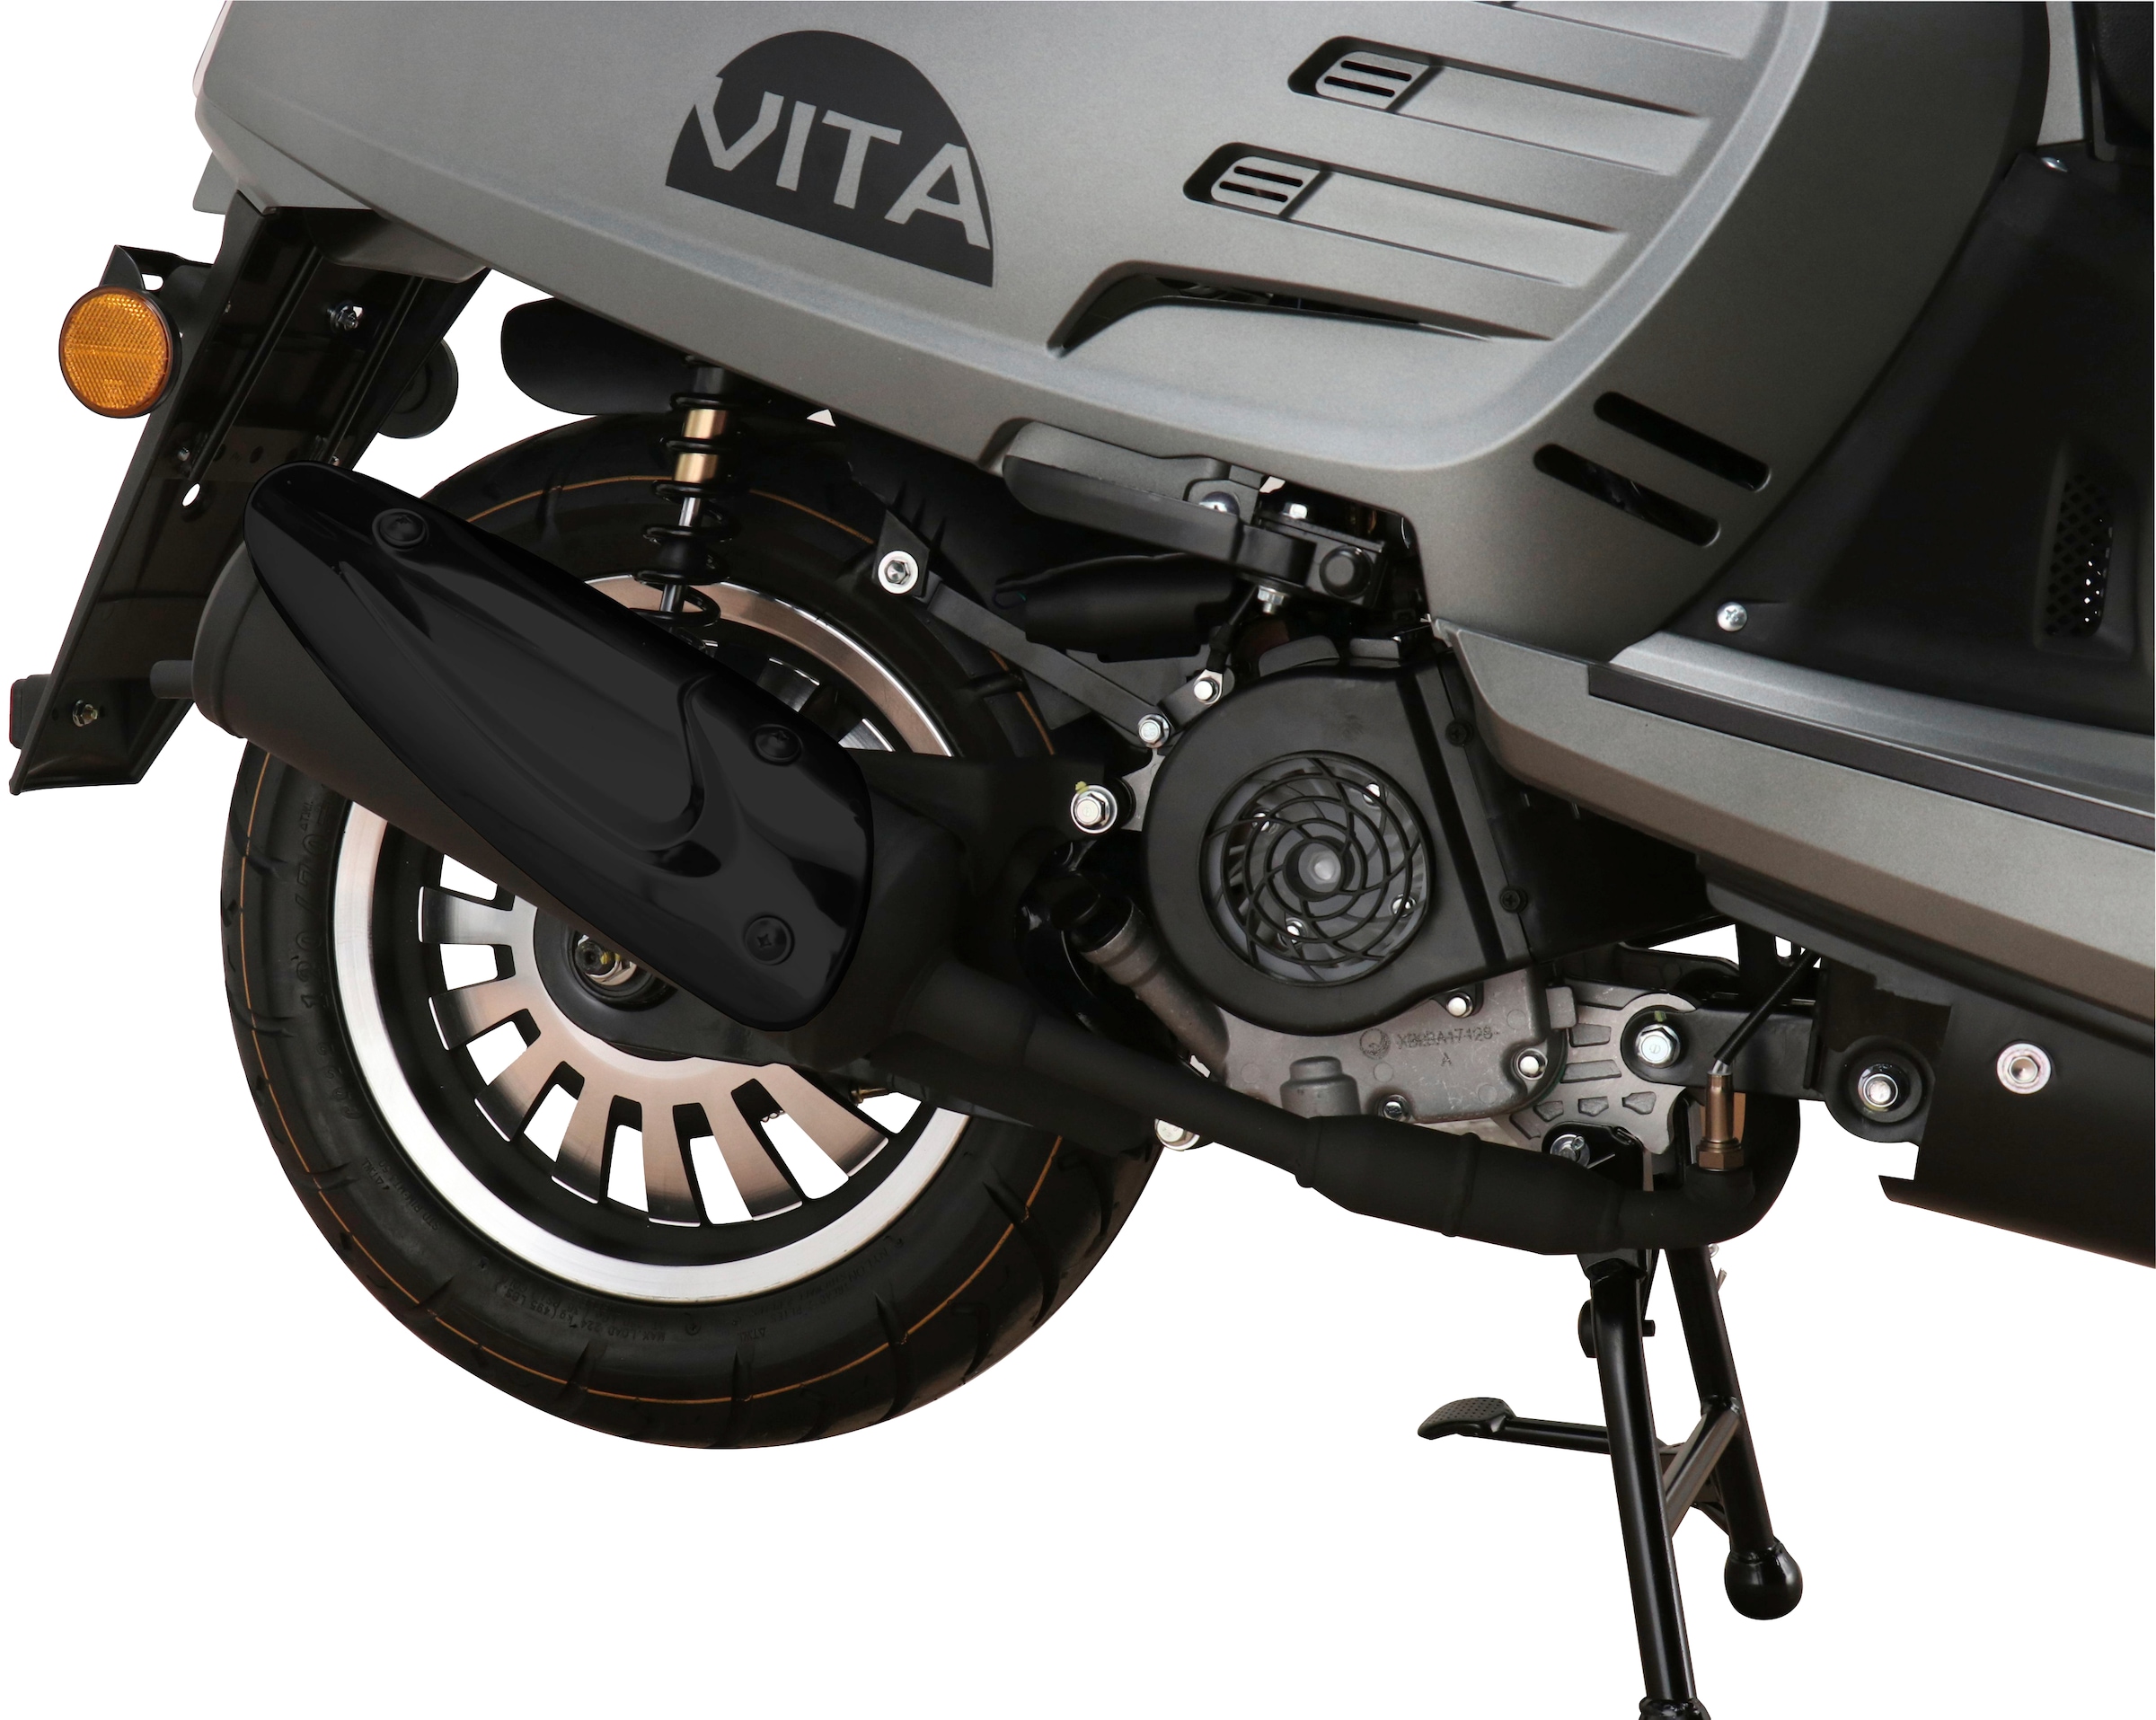 Alpha Motors Motorroller »Vita«, 50 cm³, 45 km/h, Euro 5, 2,99 PS, mit USB-Anschluss